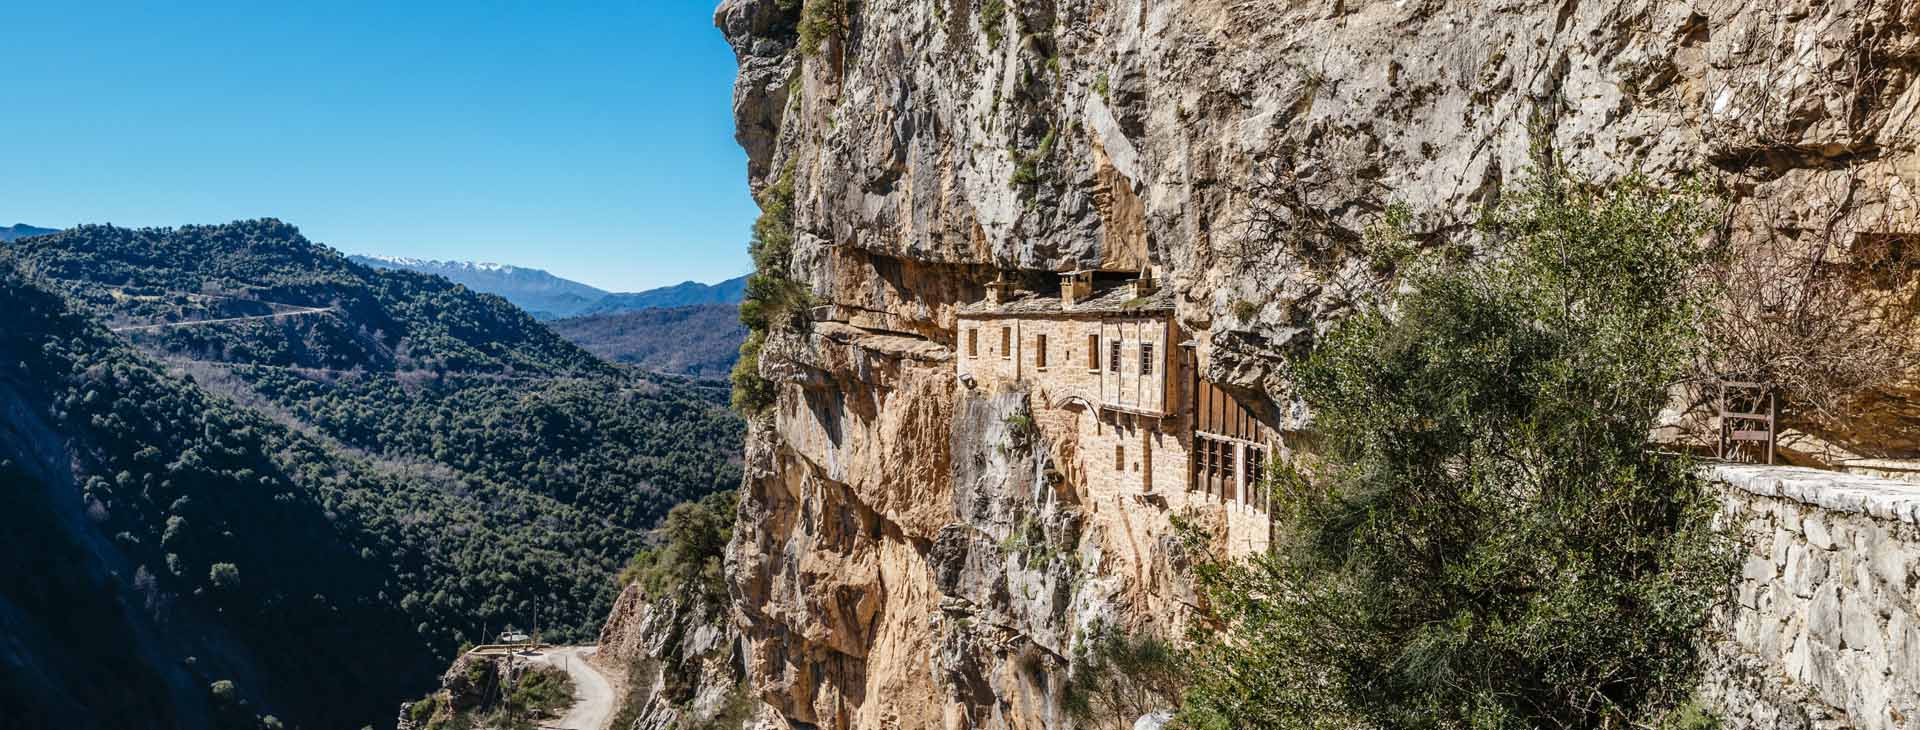 Monastery of Kipina, Ioannina